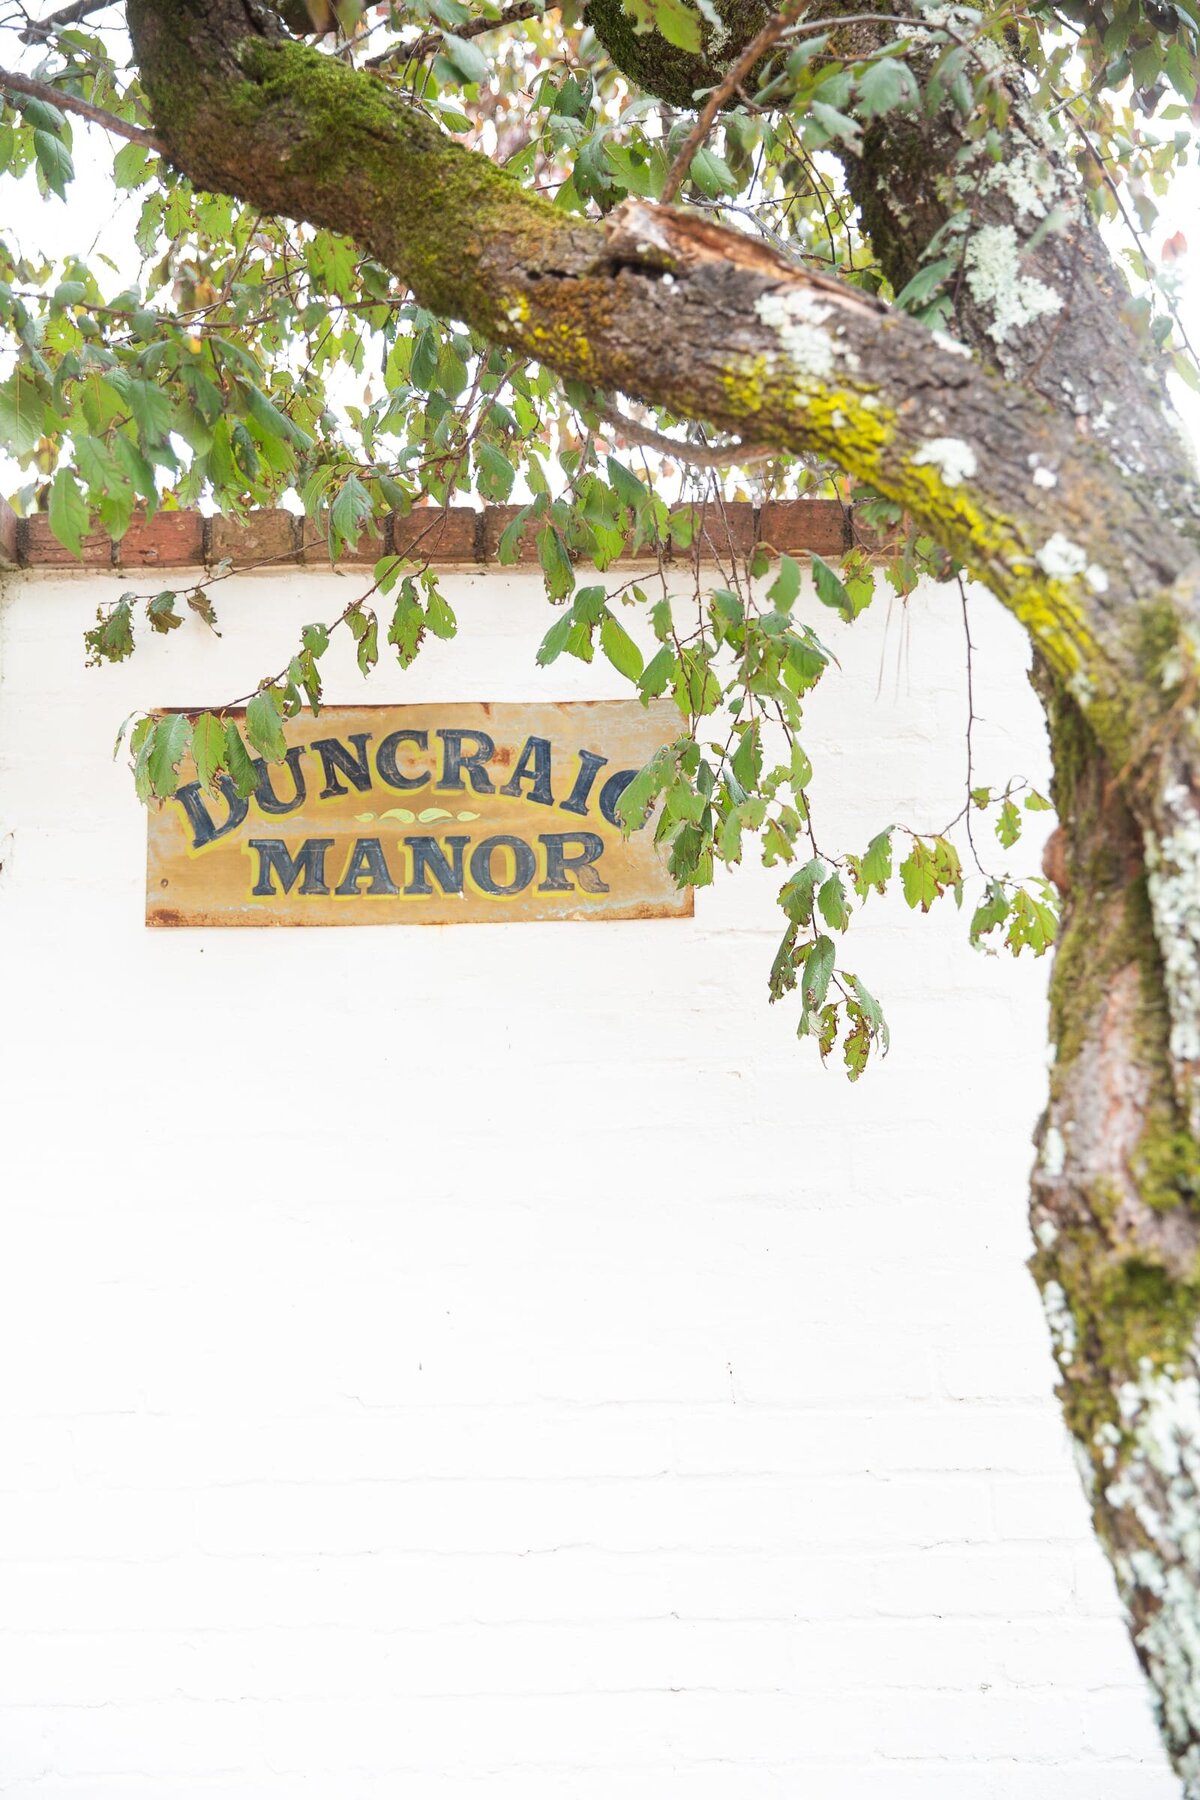 duncraig-manor-sign-white-brick